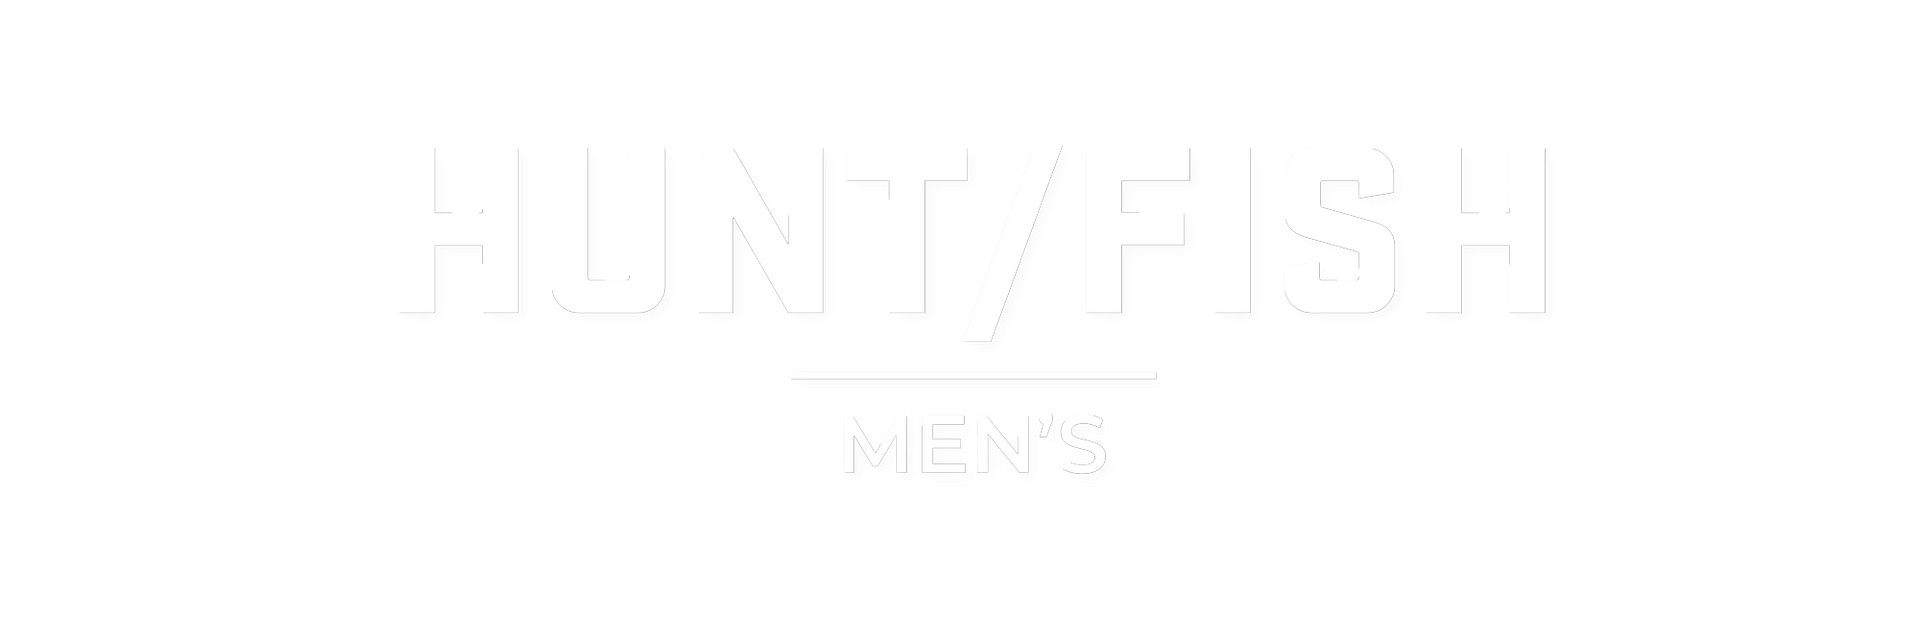 Men's Hunt/Fish  Header Image Text Overlay